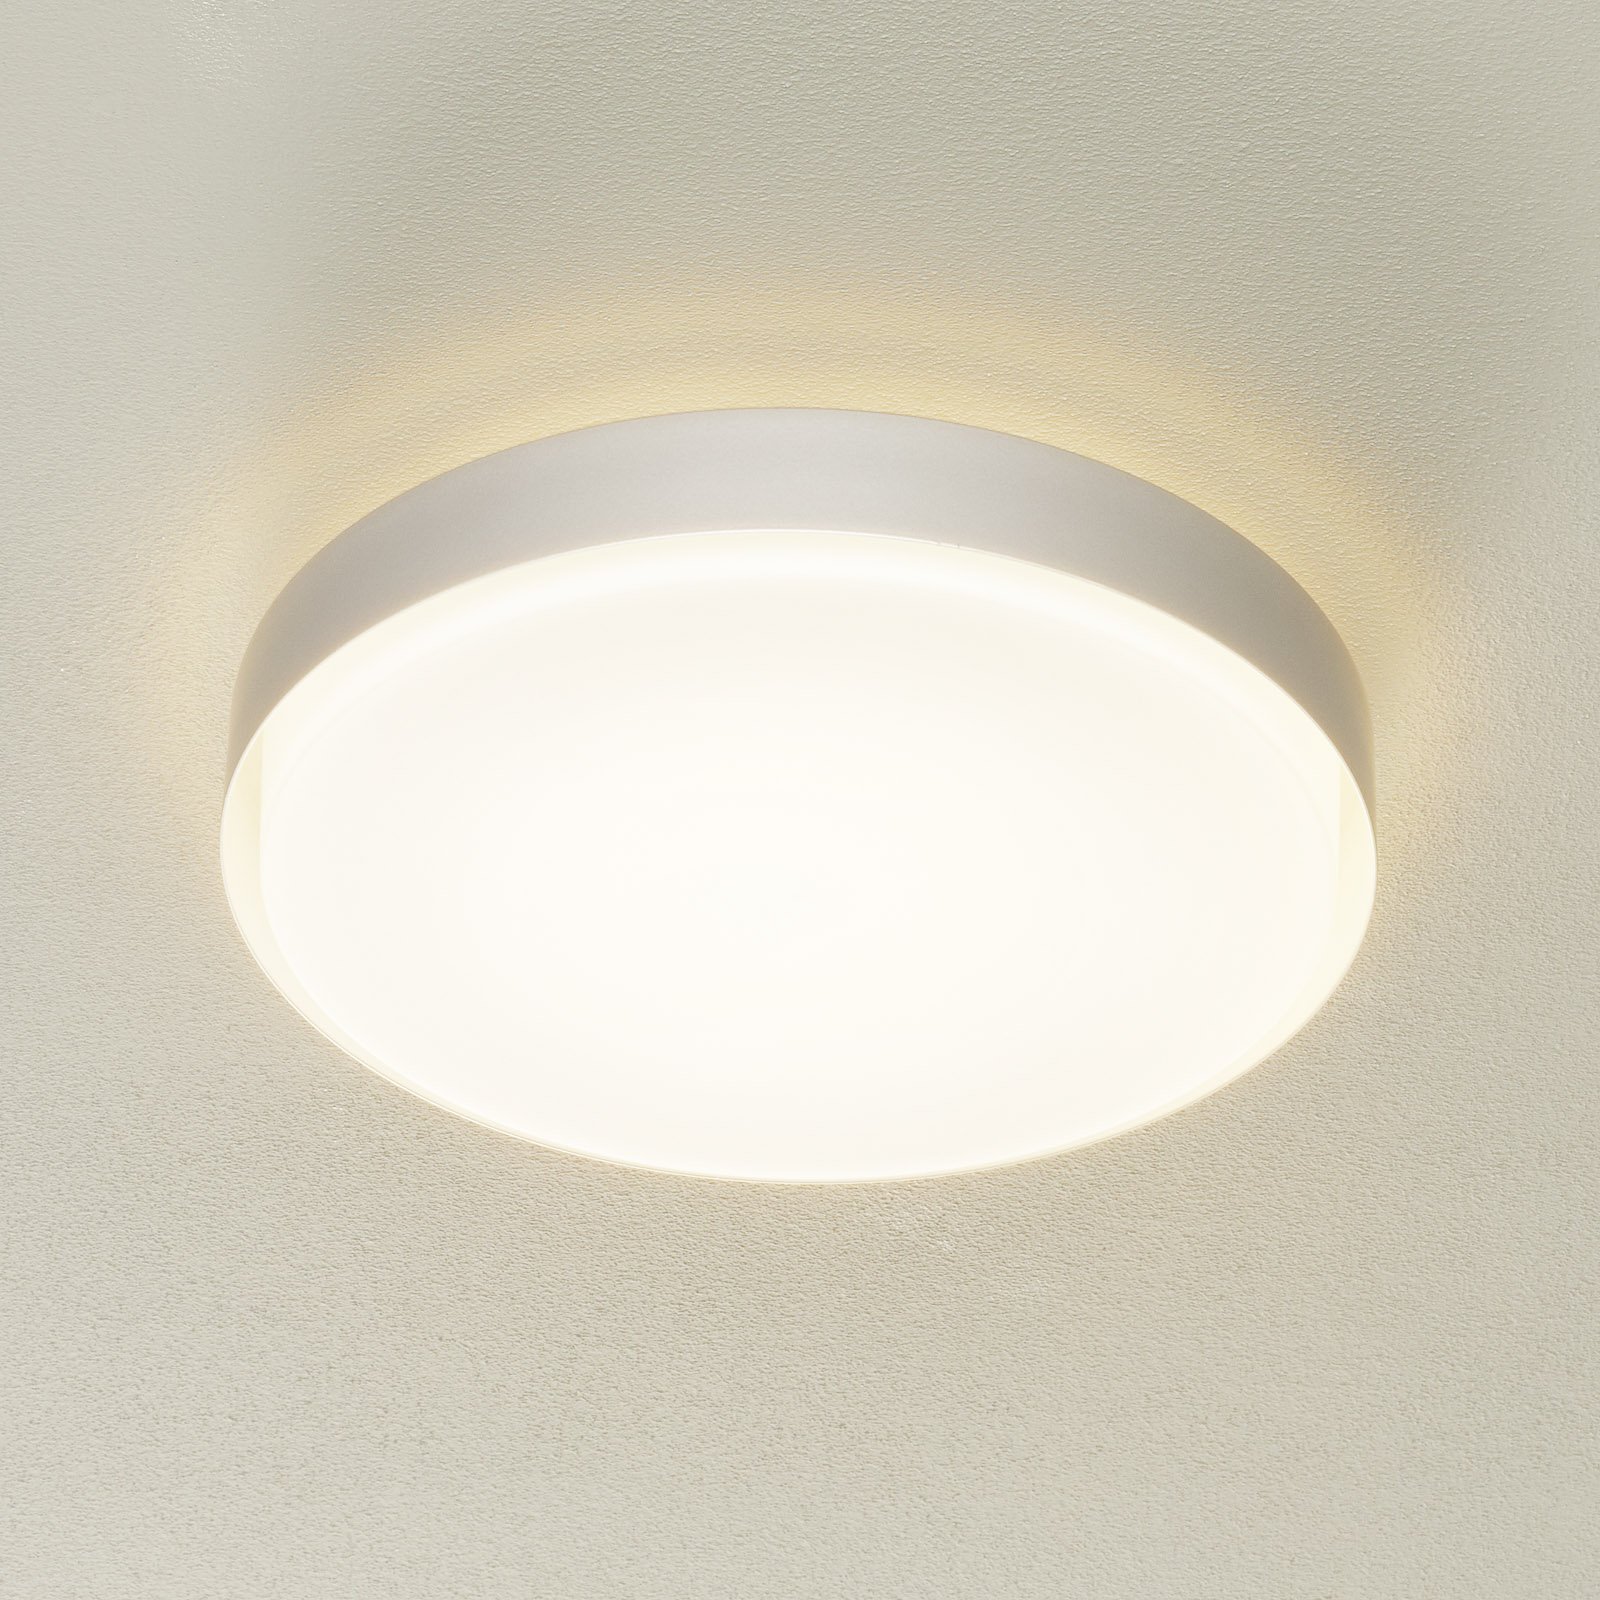 BEGA 34279 LED lámpa, alu., Ø 42 cm, DALI